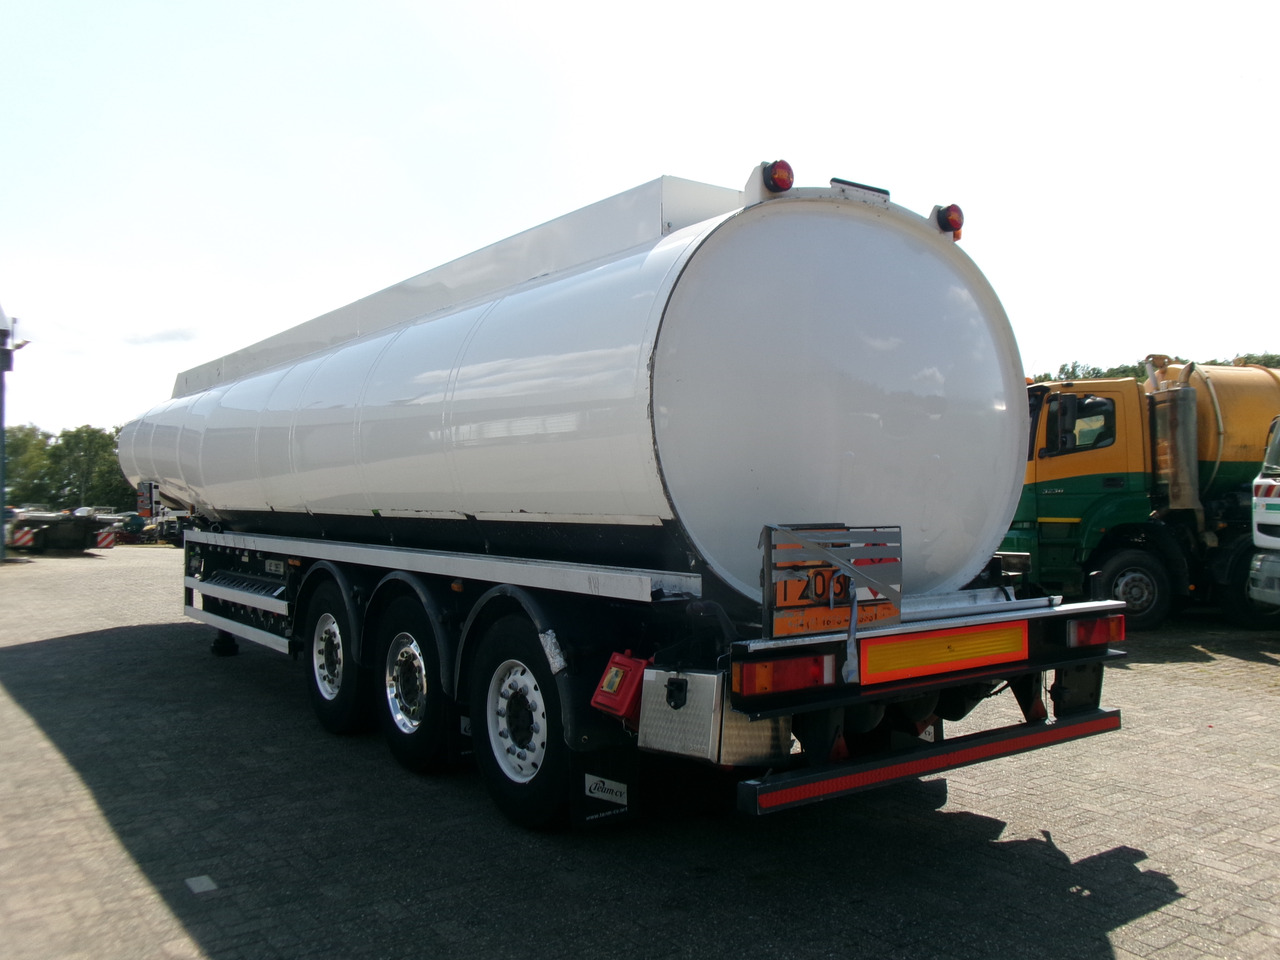 Полуприцеп-цистерна для транспортировки топлива Lakeland Fuel tank alu 42.8 m3 / 6 comp + pump: фото 4